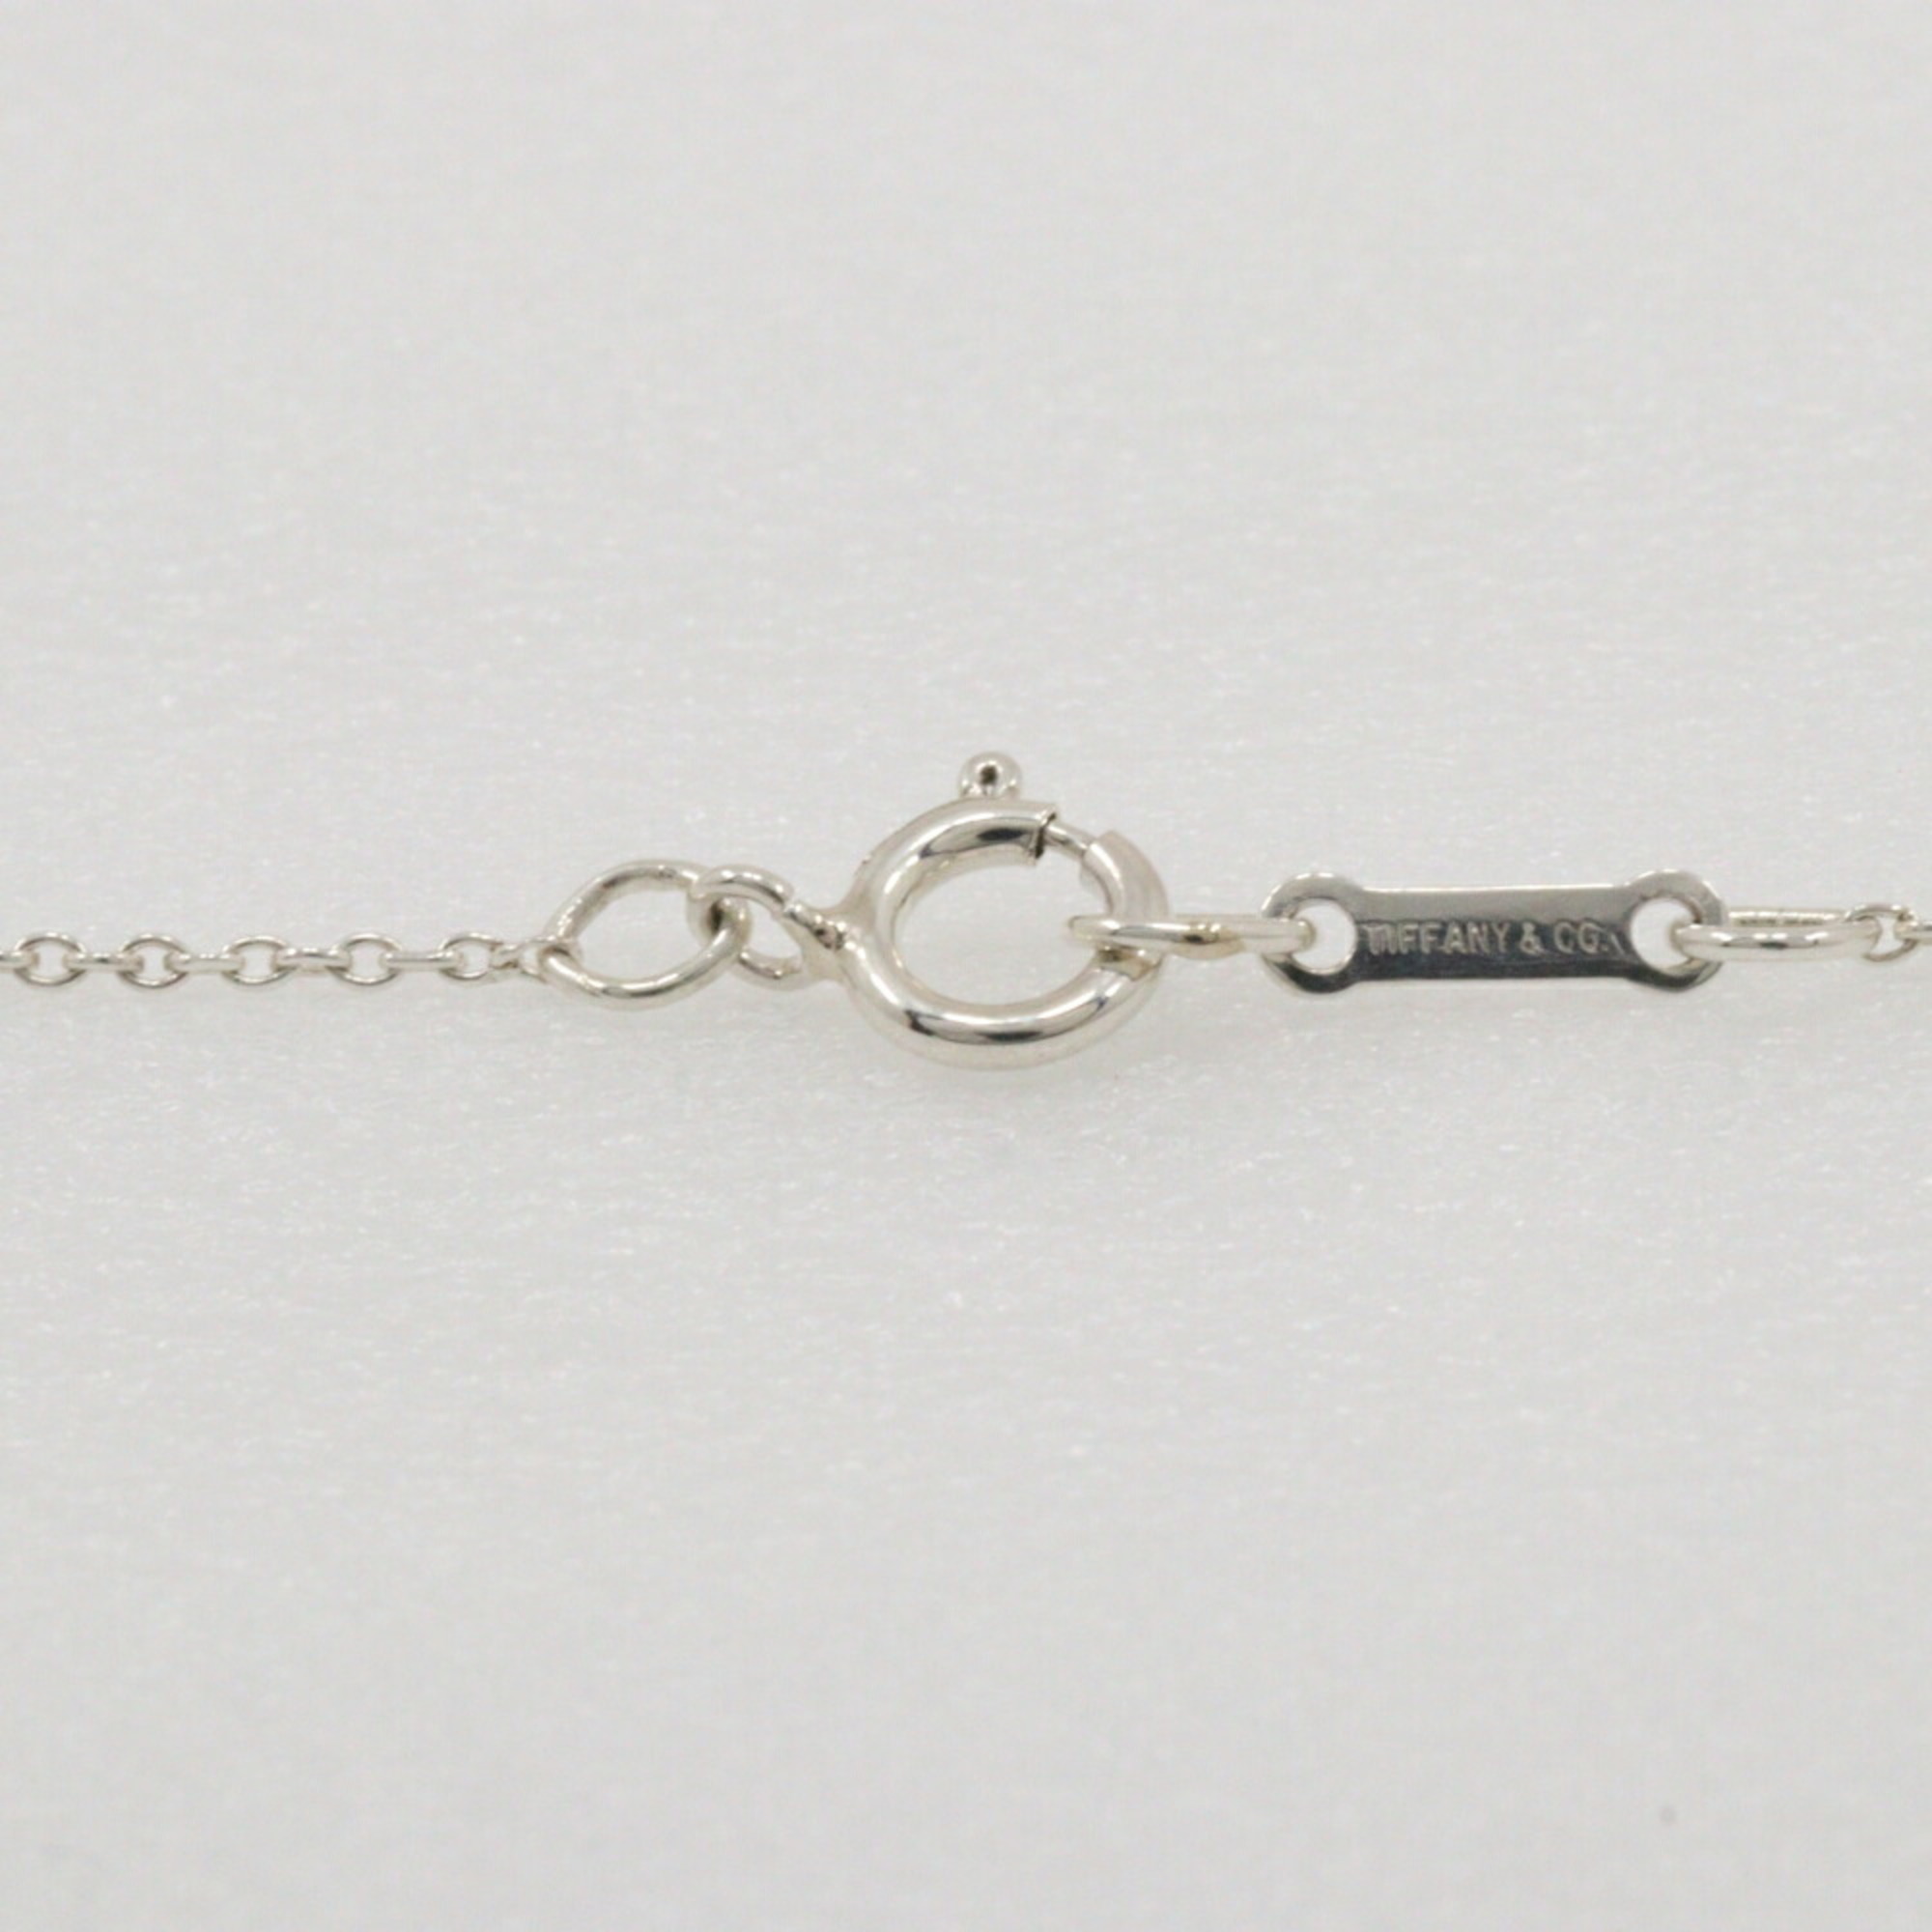 Tiffany & Co. Bean Necklace, Silver 925, Approx. 7.9g, Bean, Women's